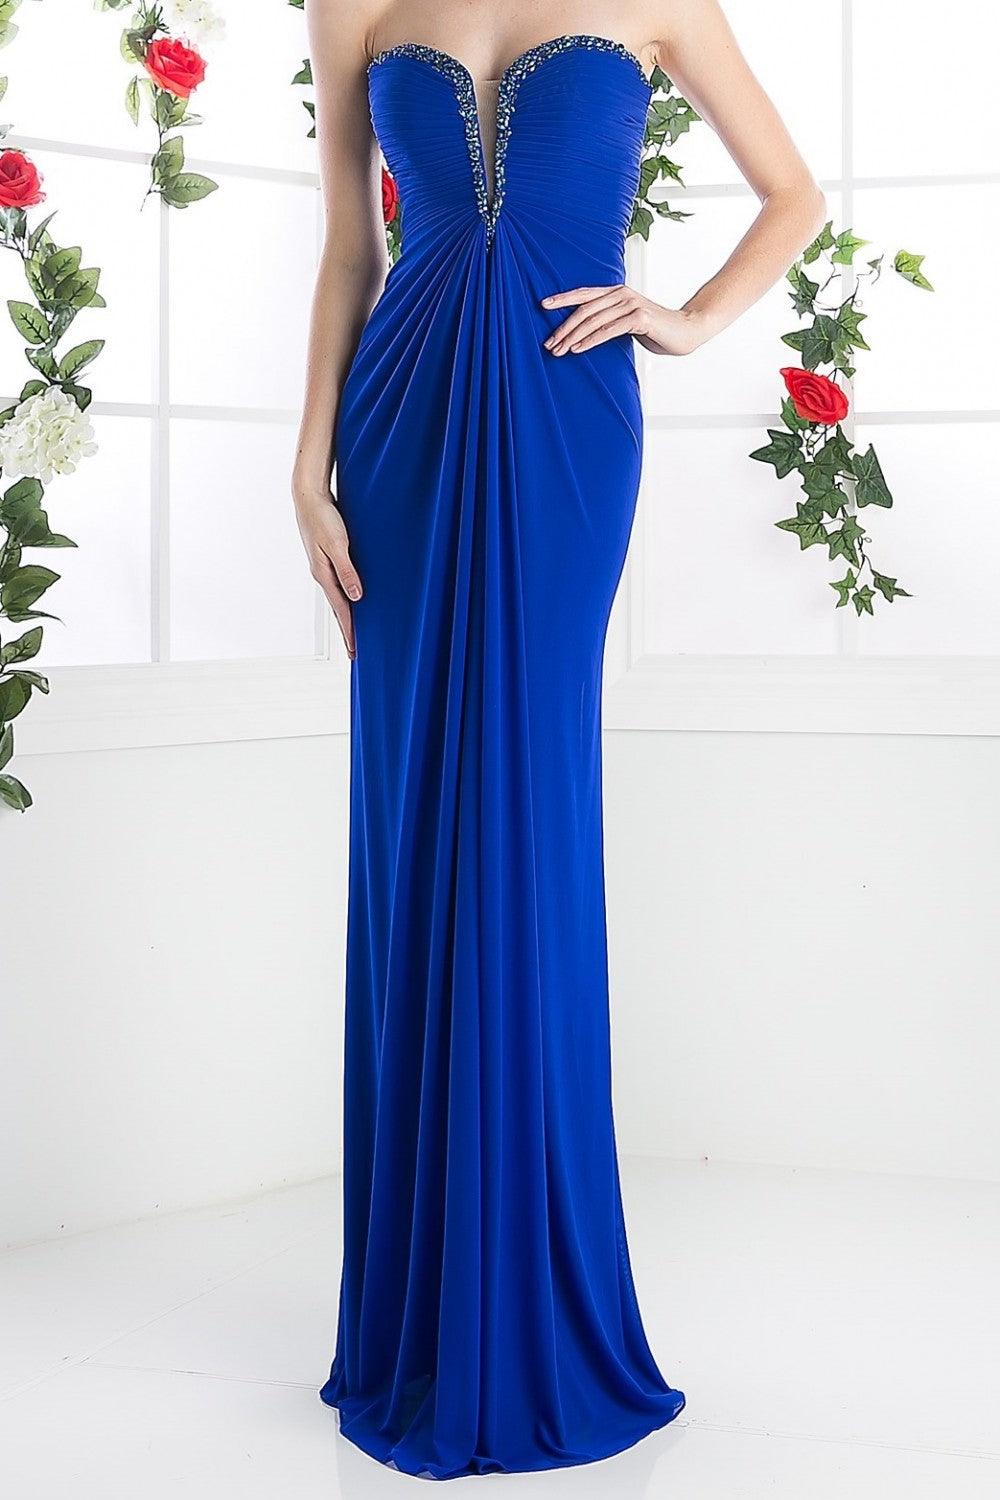 Strapless Long Formal Dress Evening Gown - The Dress Outlet Cinderella Divine